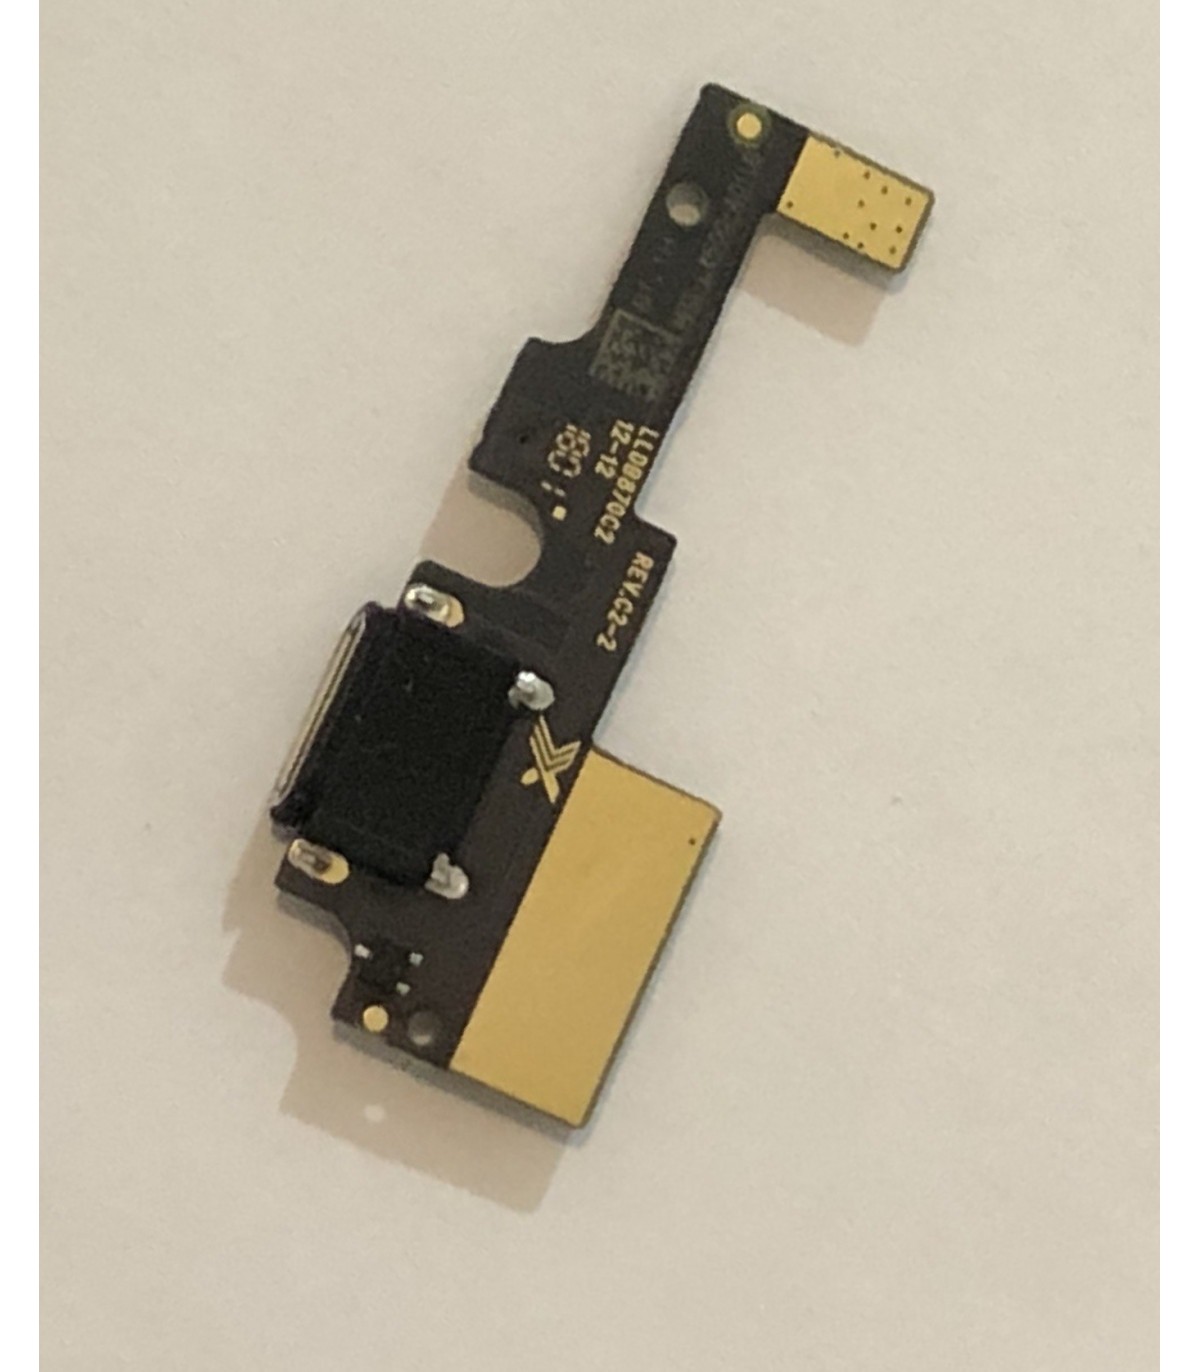 Placa auxiliar con conector de carga USB Tipo C para BQ Aquaris X/Aquaris X Pro